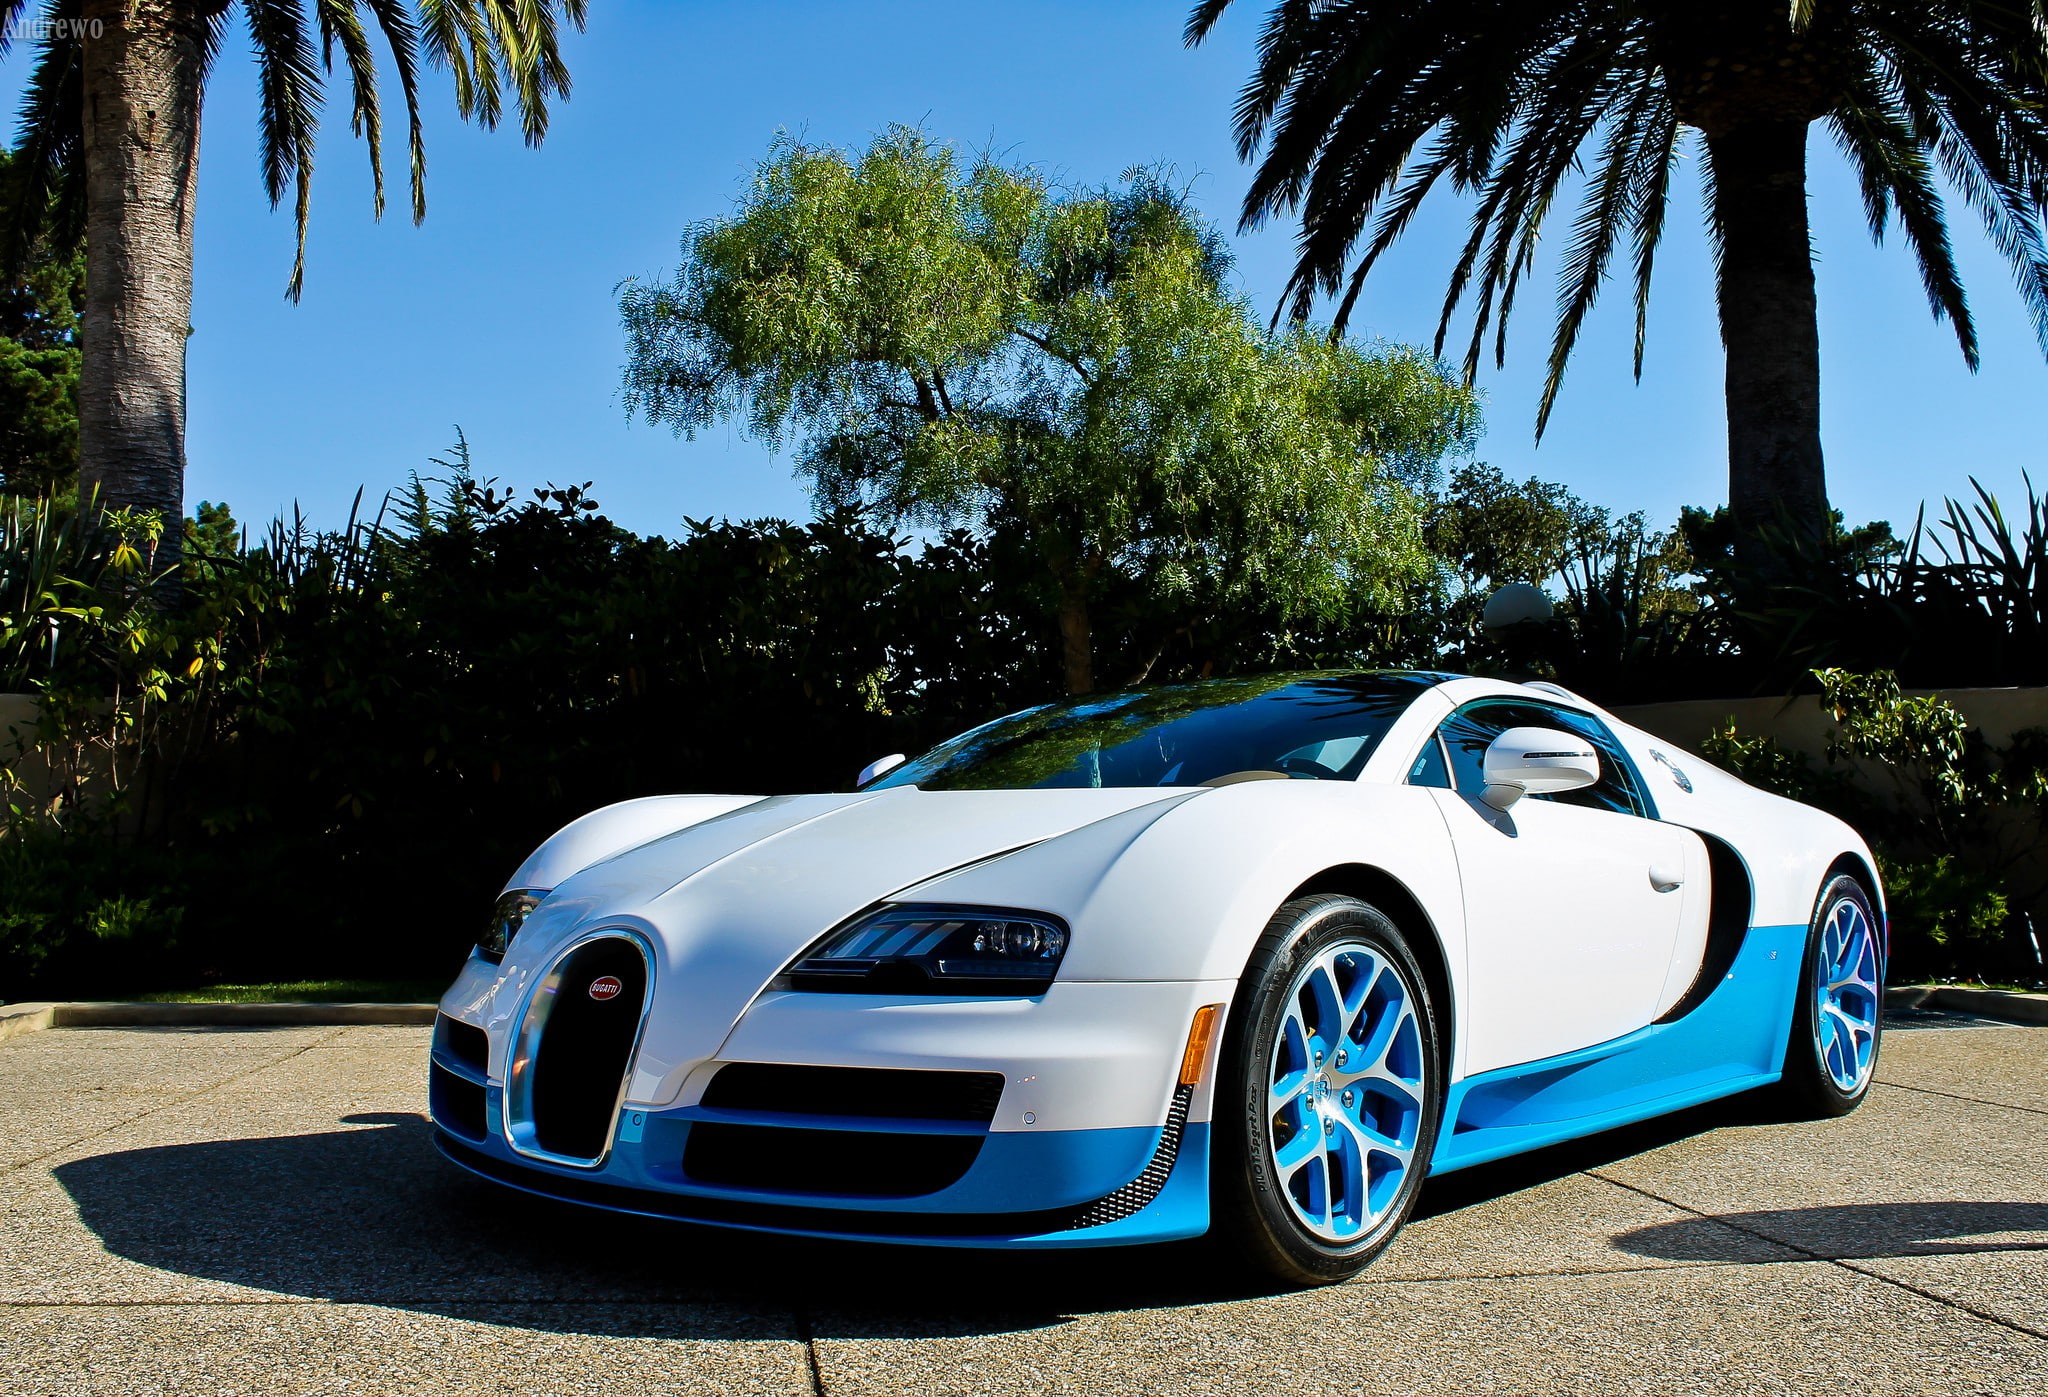 Vitesse, Bugatti Veyron, white and blue bugatti veyron, palm trees